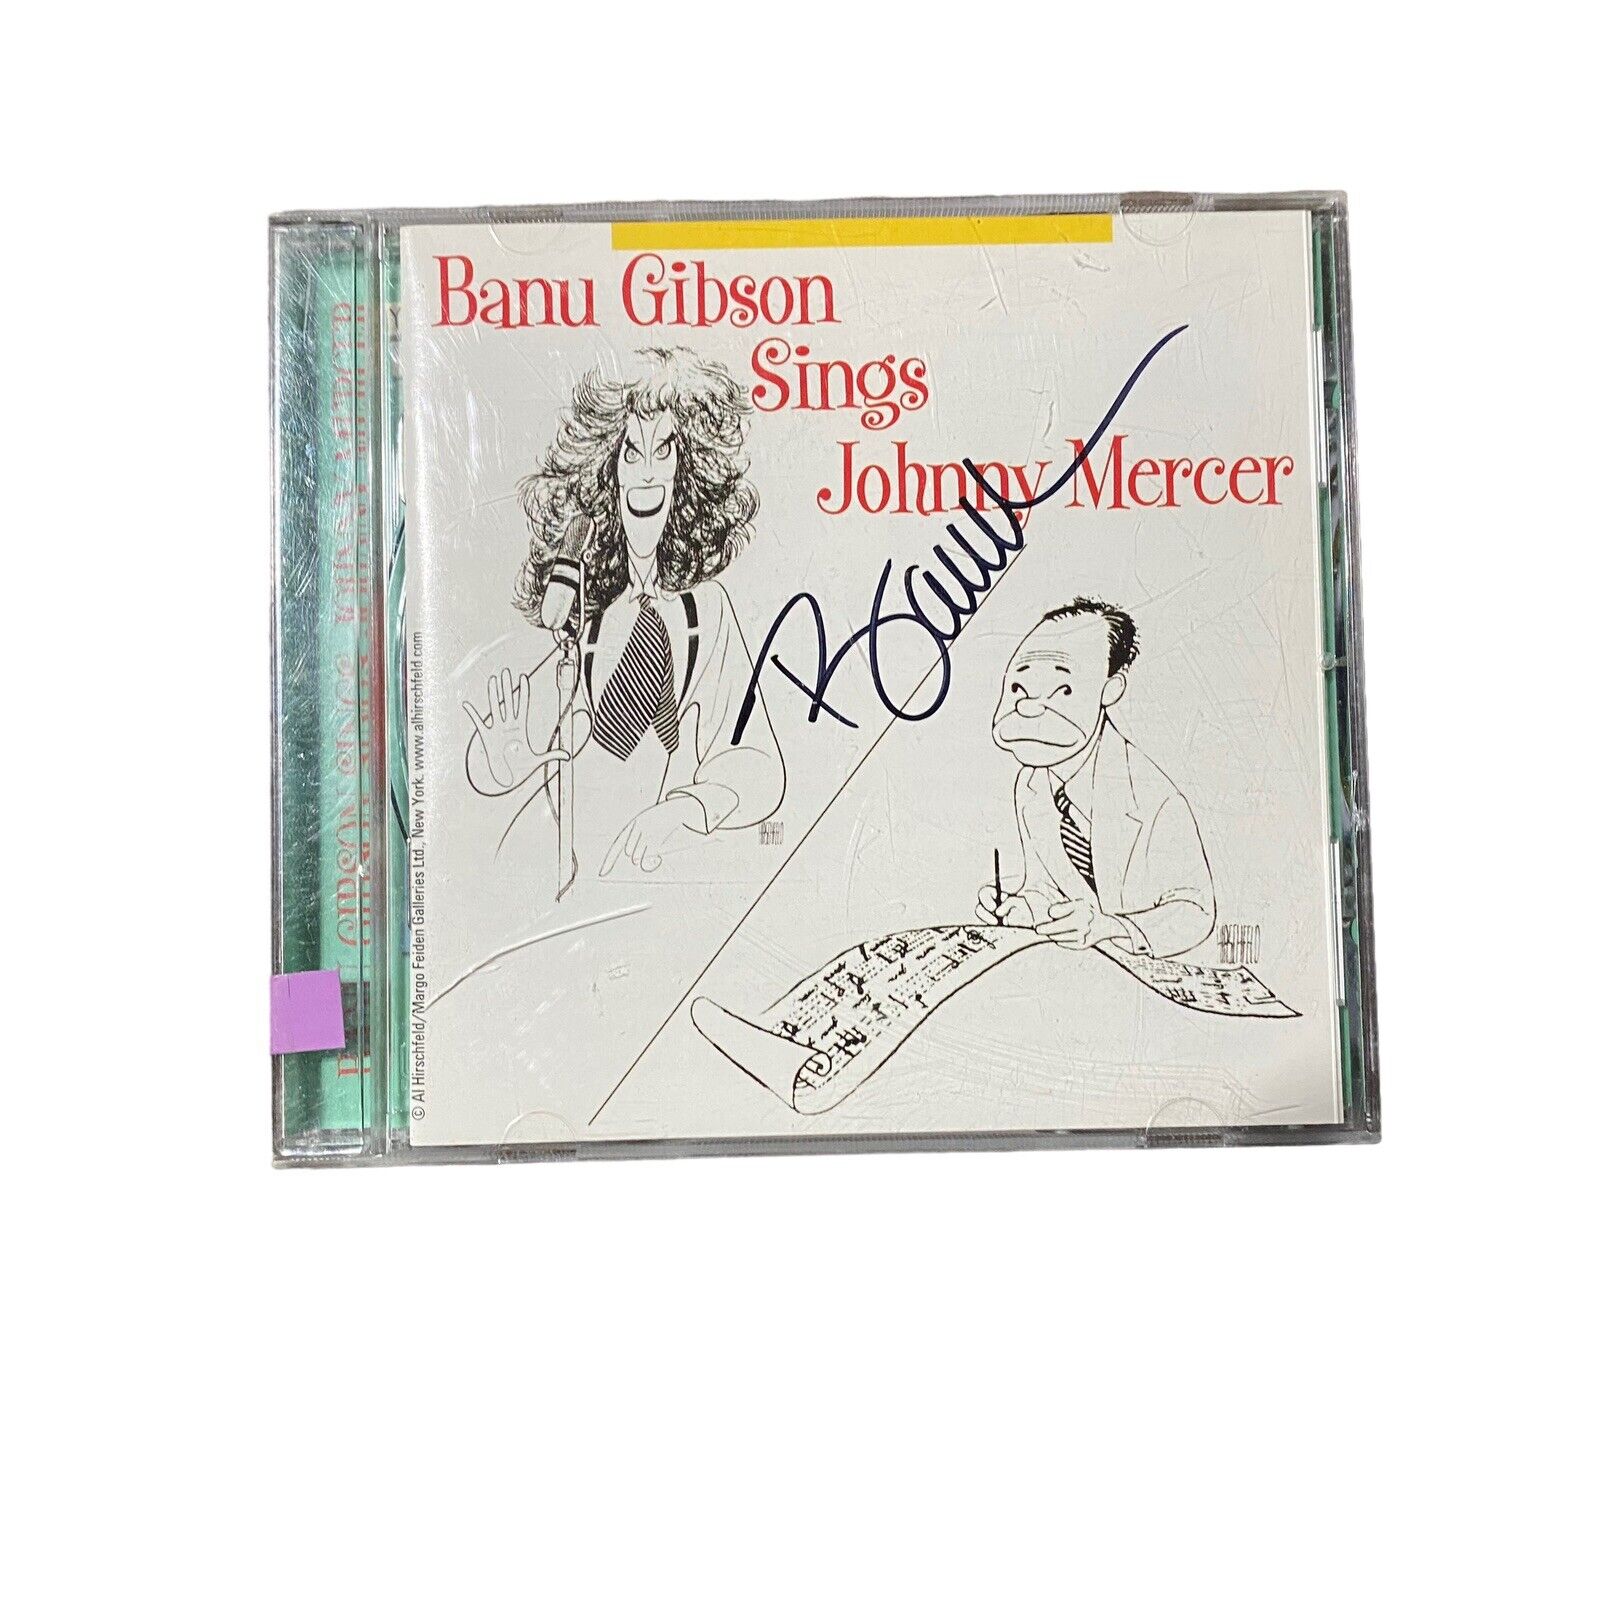 BANU GIBSON - Banu Gibson Sings Johnny Mercer - CD - Signed